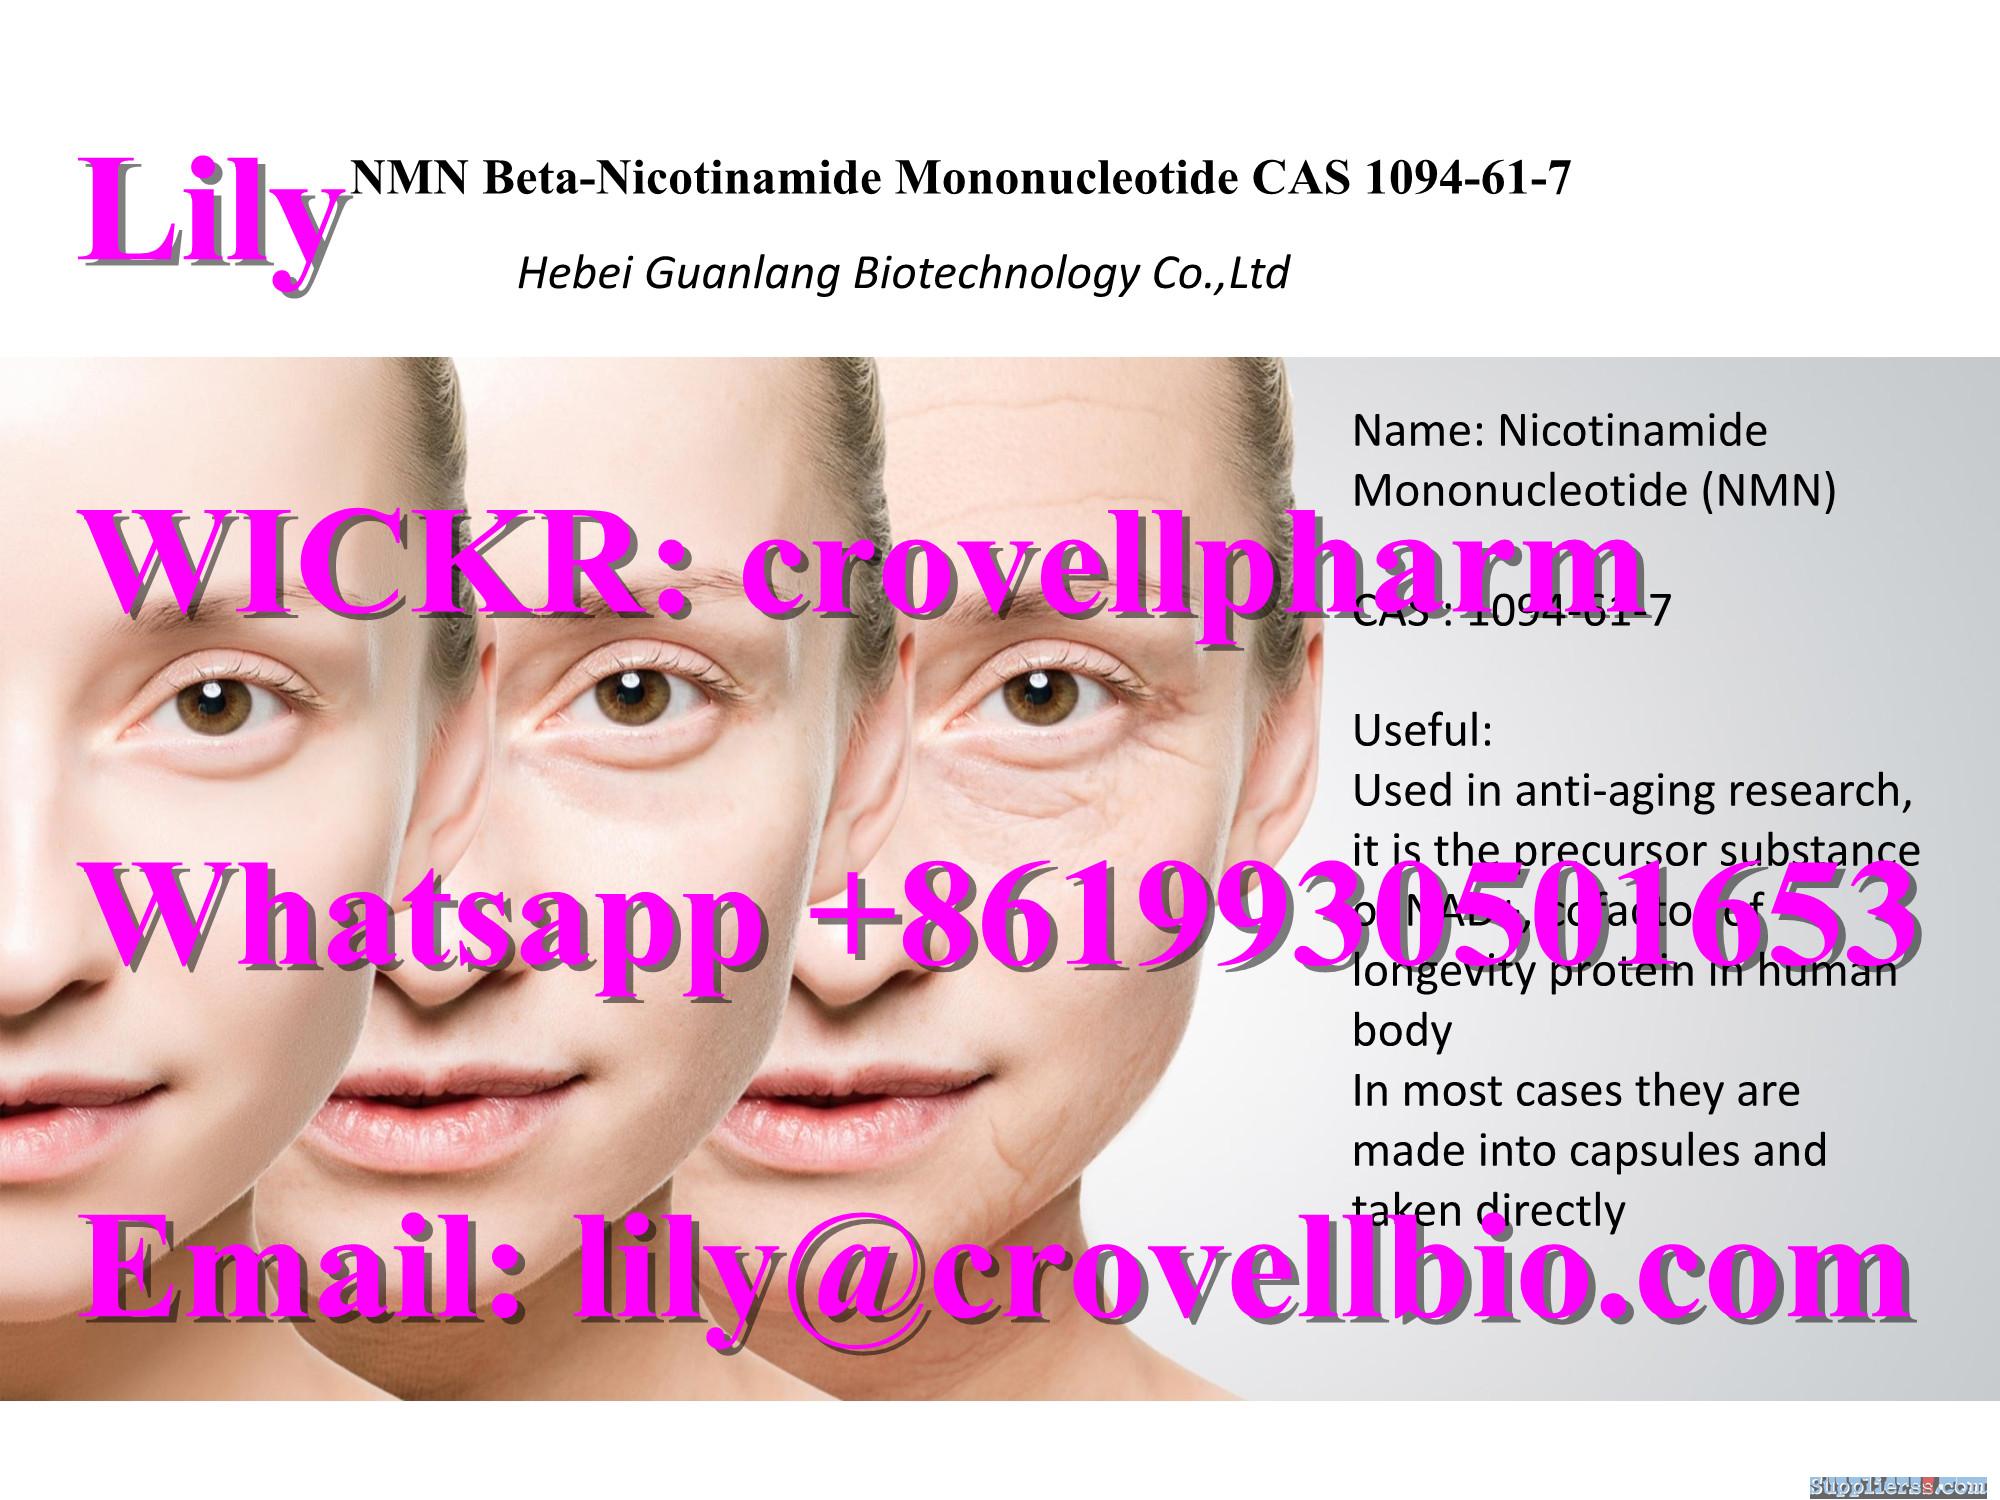 Big news ! NMN powder cas 1094-61-7 NMN capsules delaying aging (lily@crovellbio.com